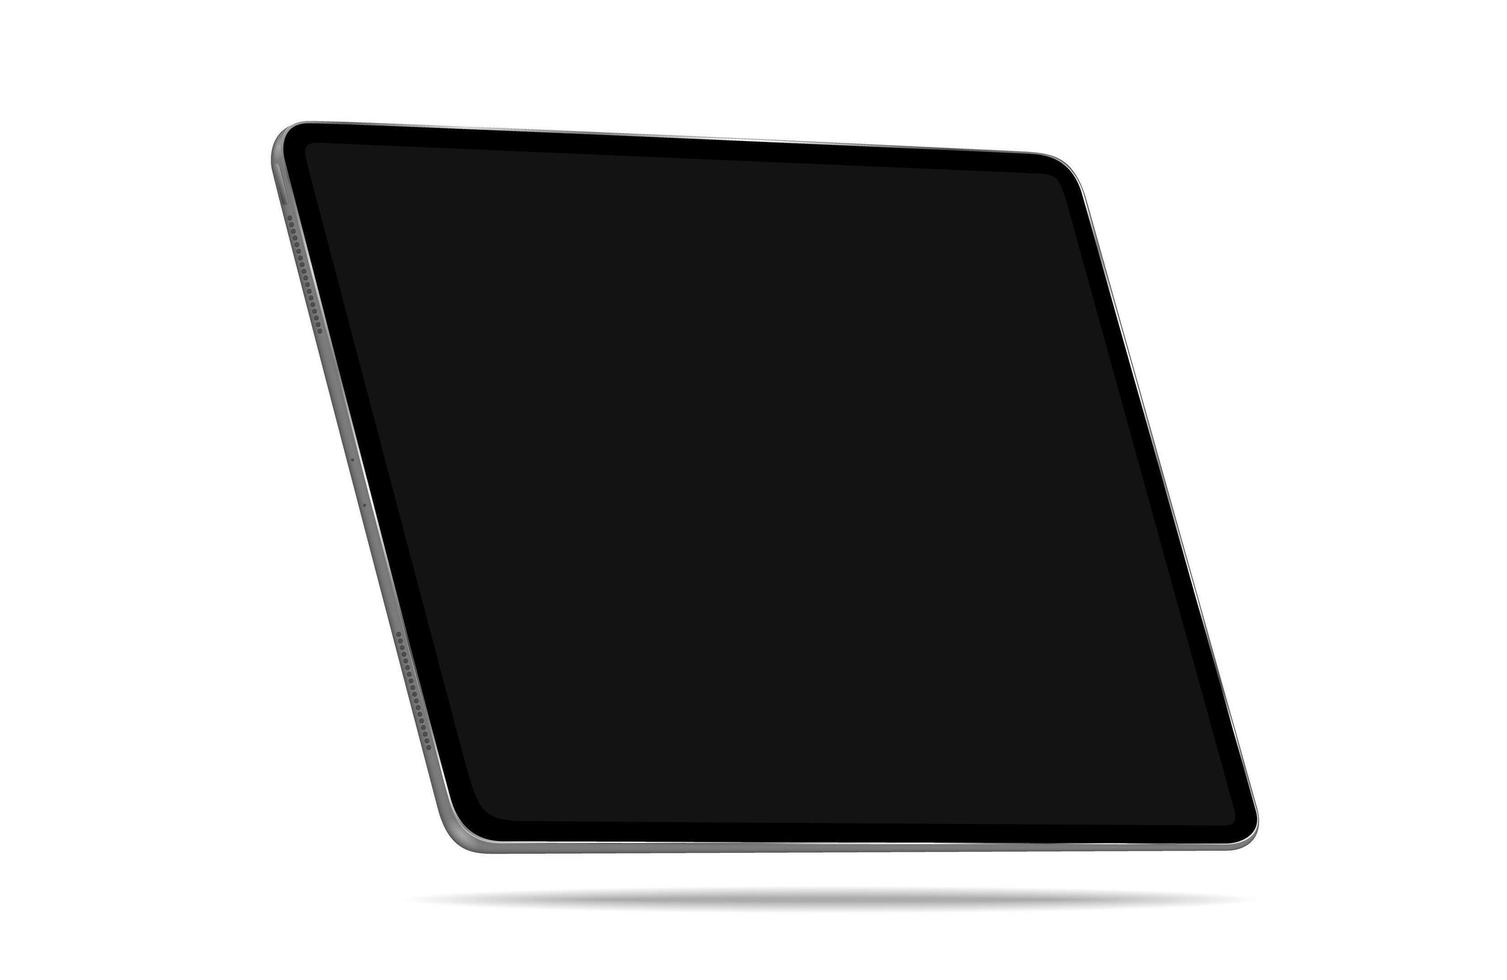 tablet preto realista com isolado no fundo branco vetor